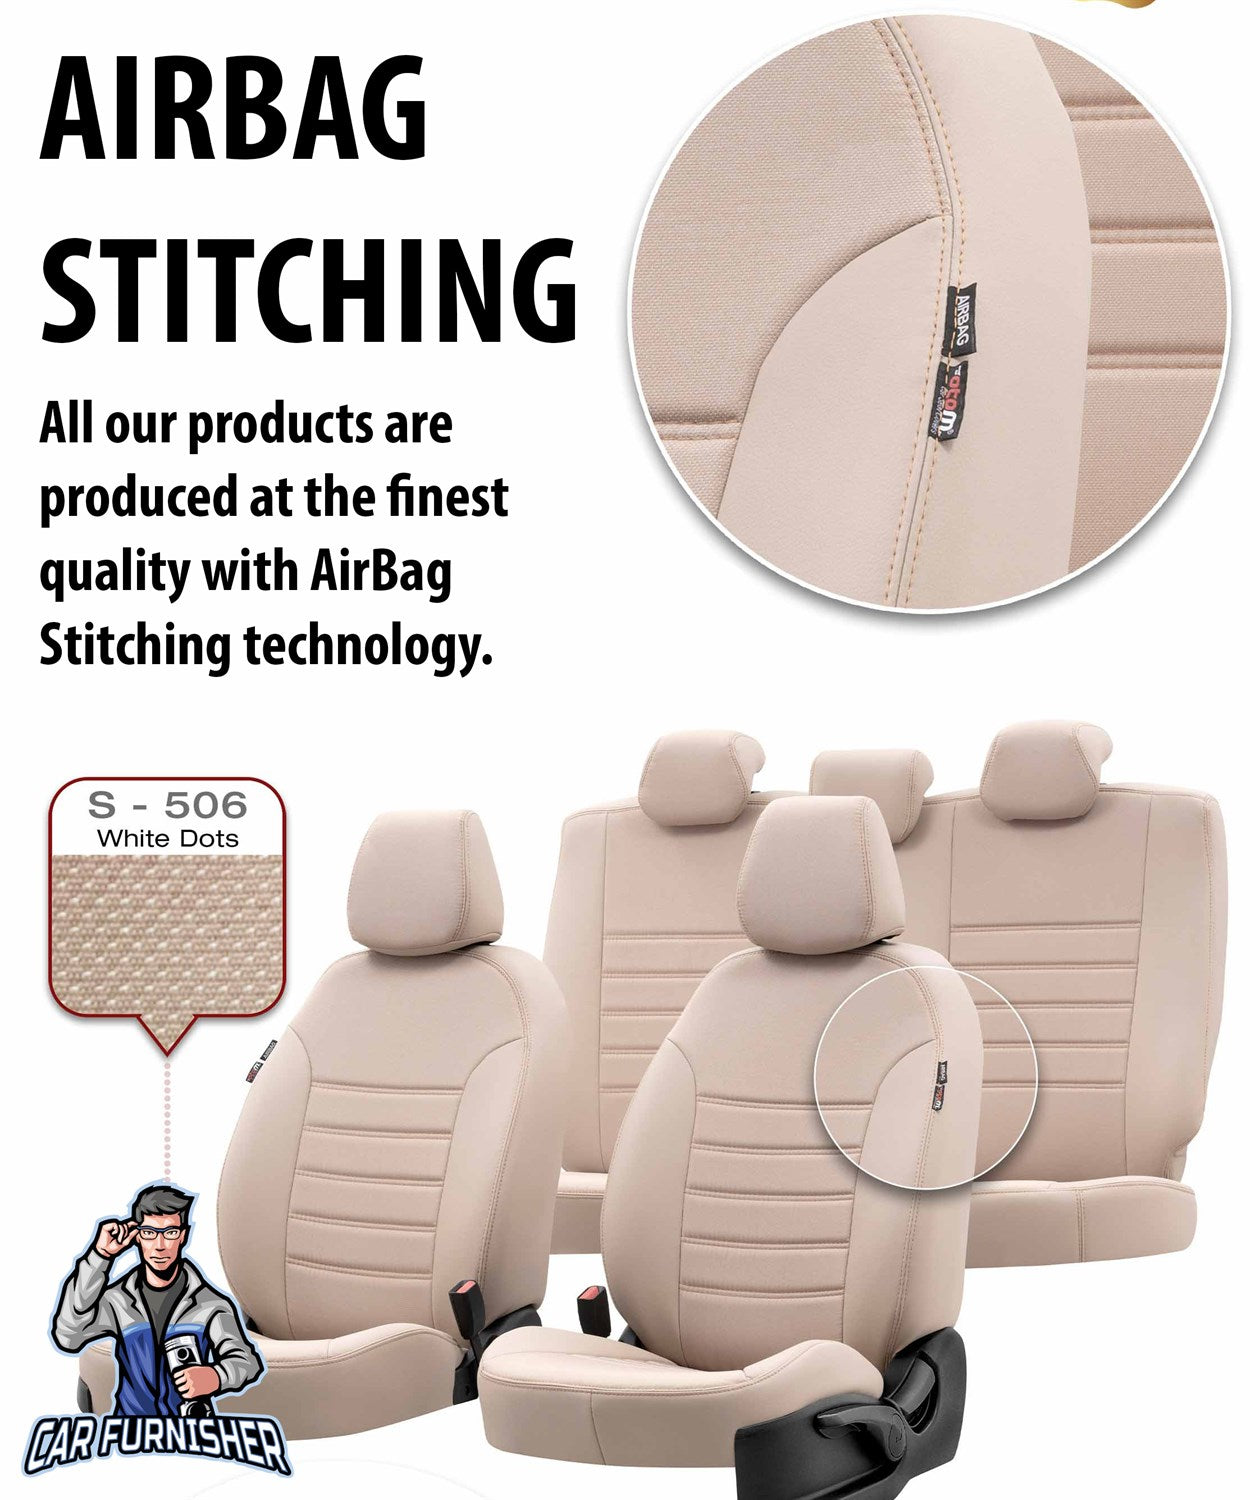 Fiat Tempra Seat Covers Paris Leather & Jacquard Design Gray Leather & Jacquard Fabric